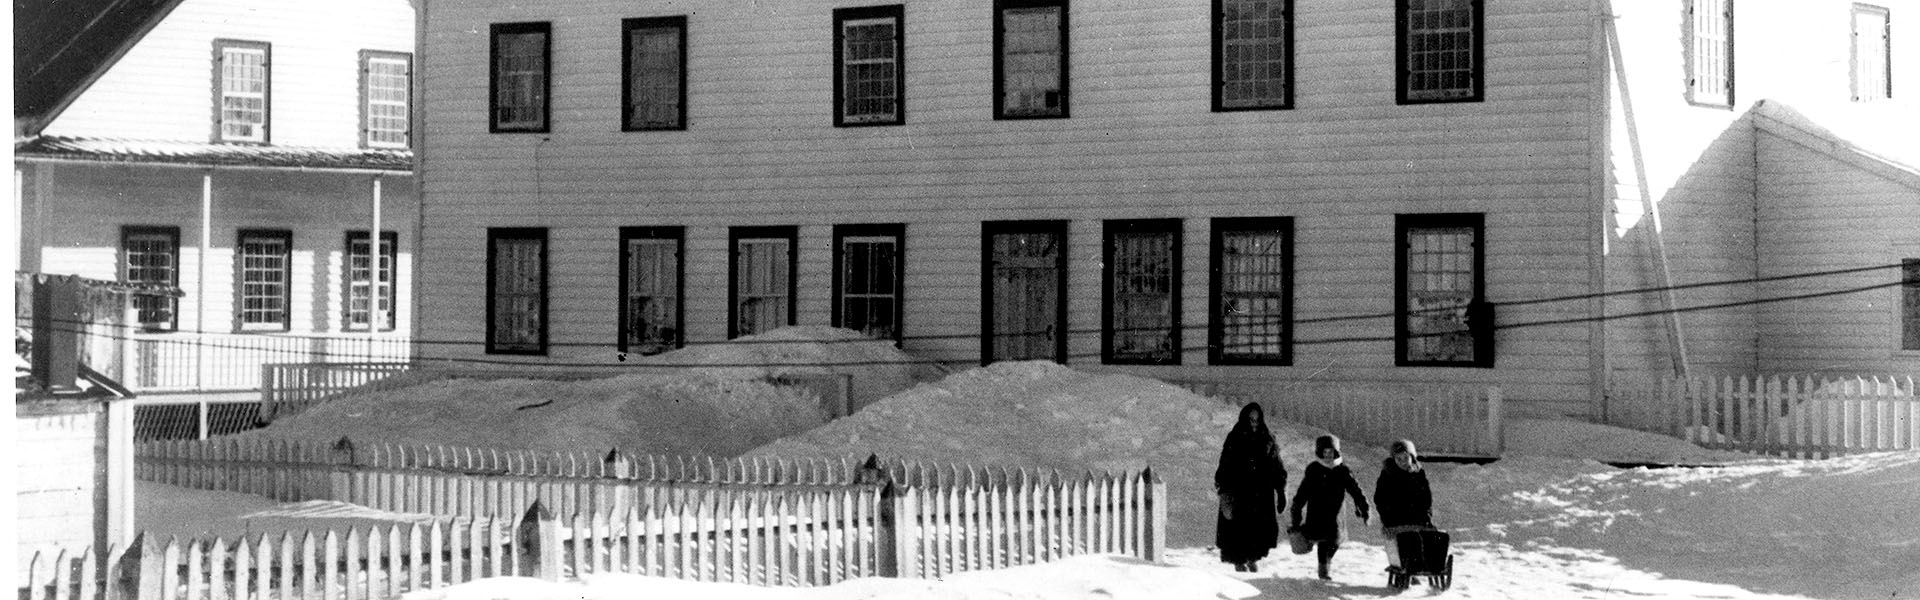 Hudson's Bay Company Staff House, Moose Factory (1934)